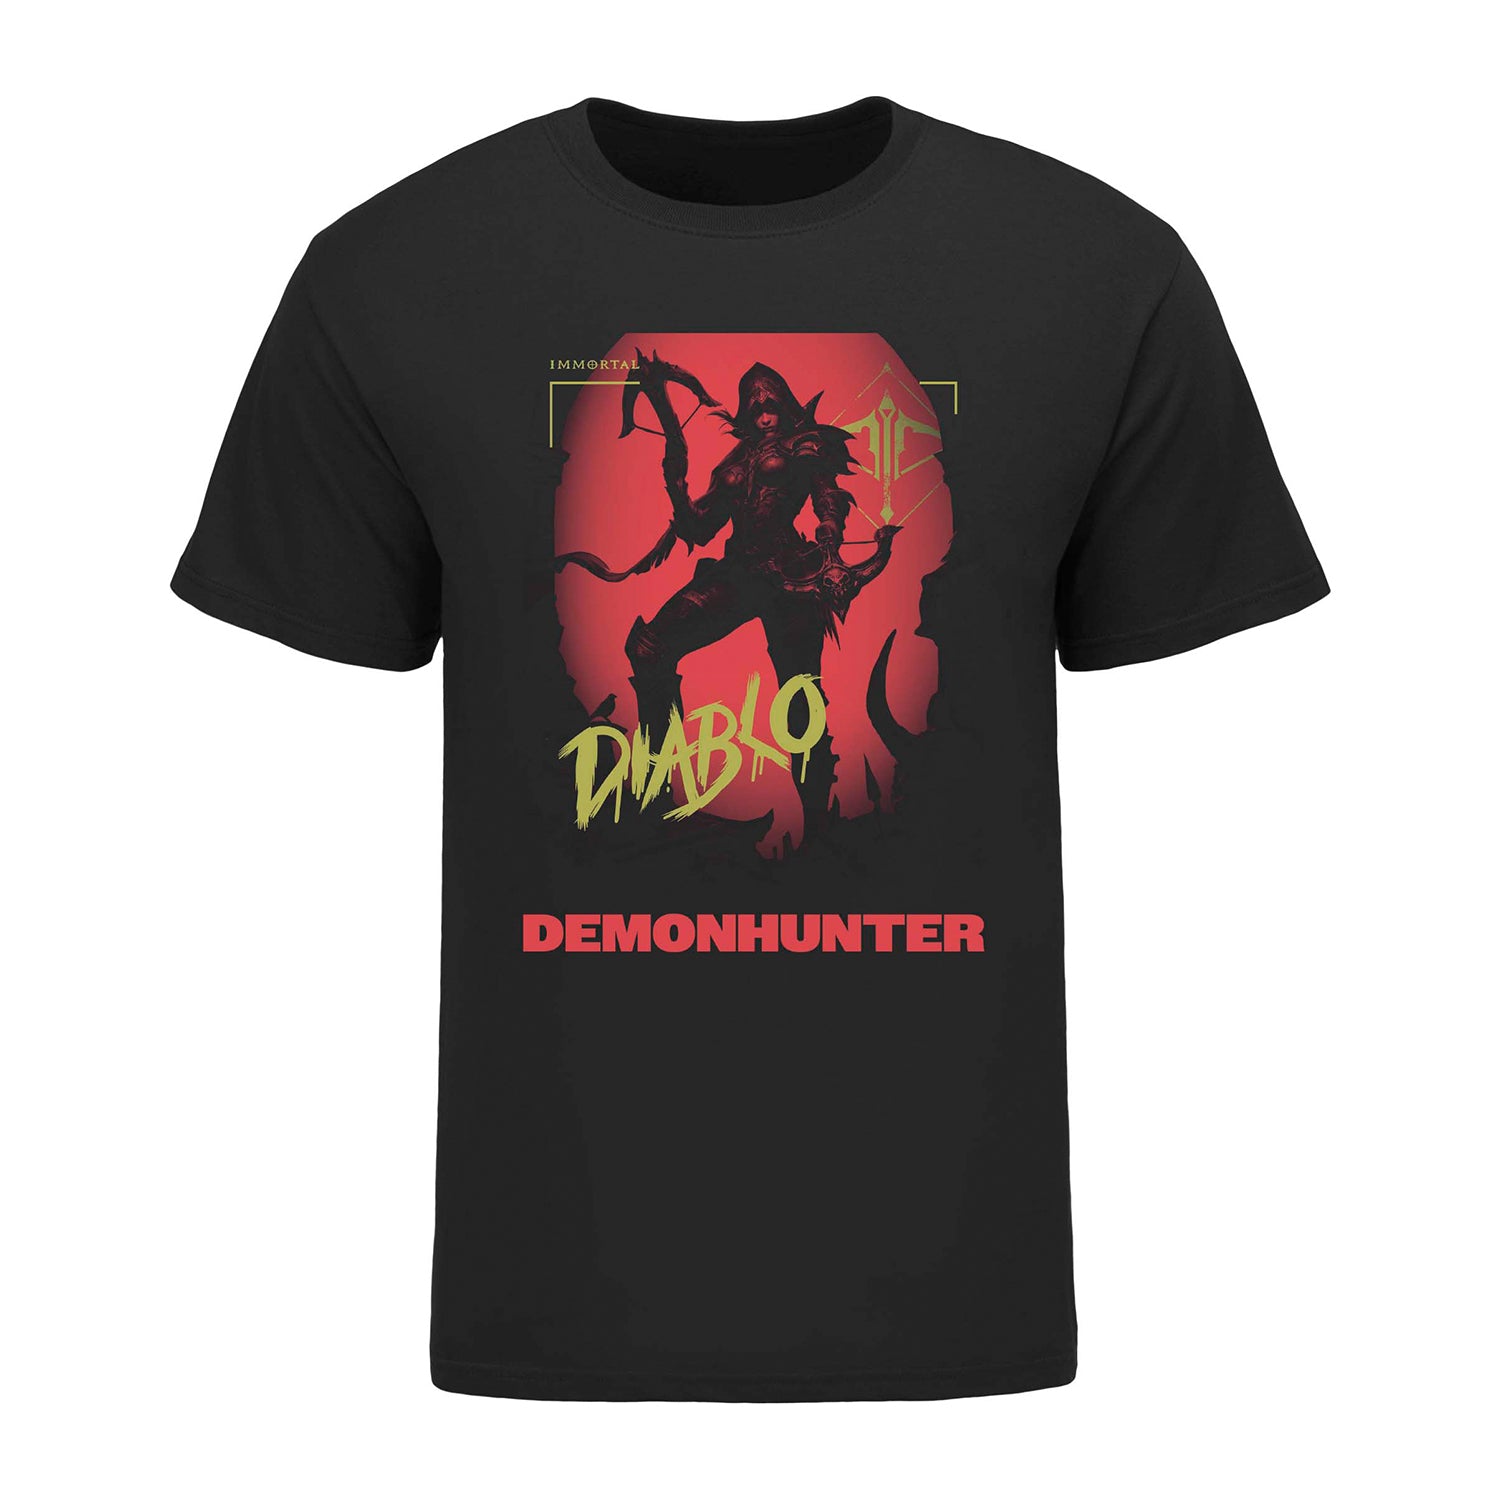 Diablo Immortal Demonhunter High Contrast Black T-Shirt - Front View